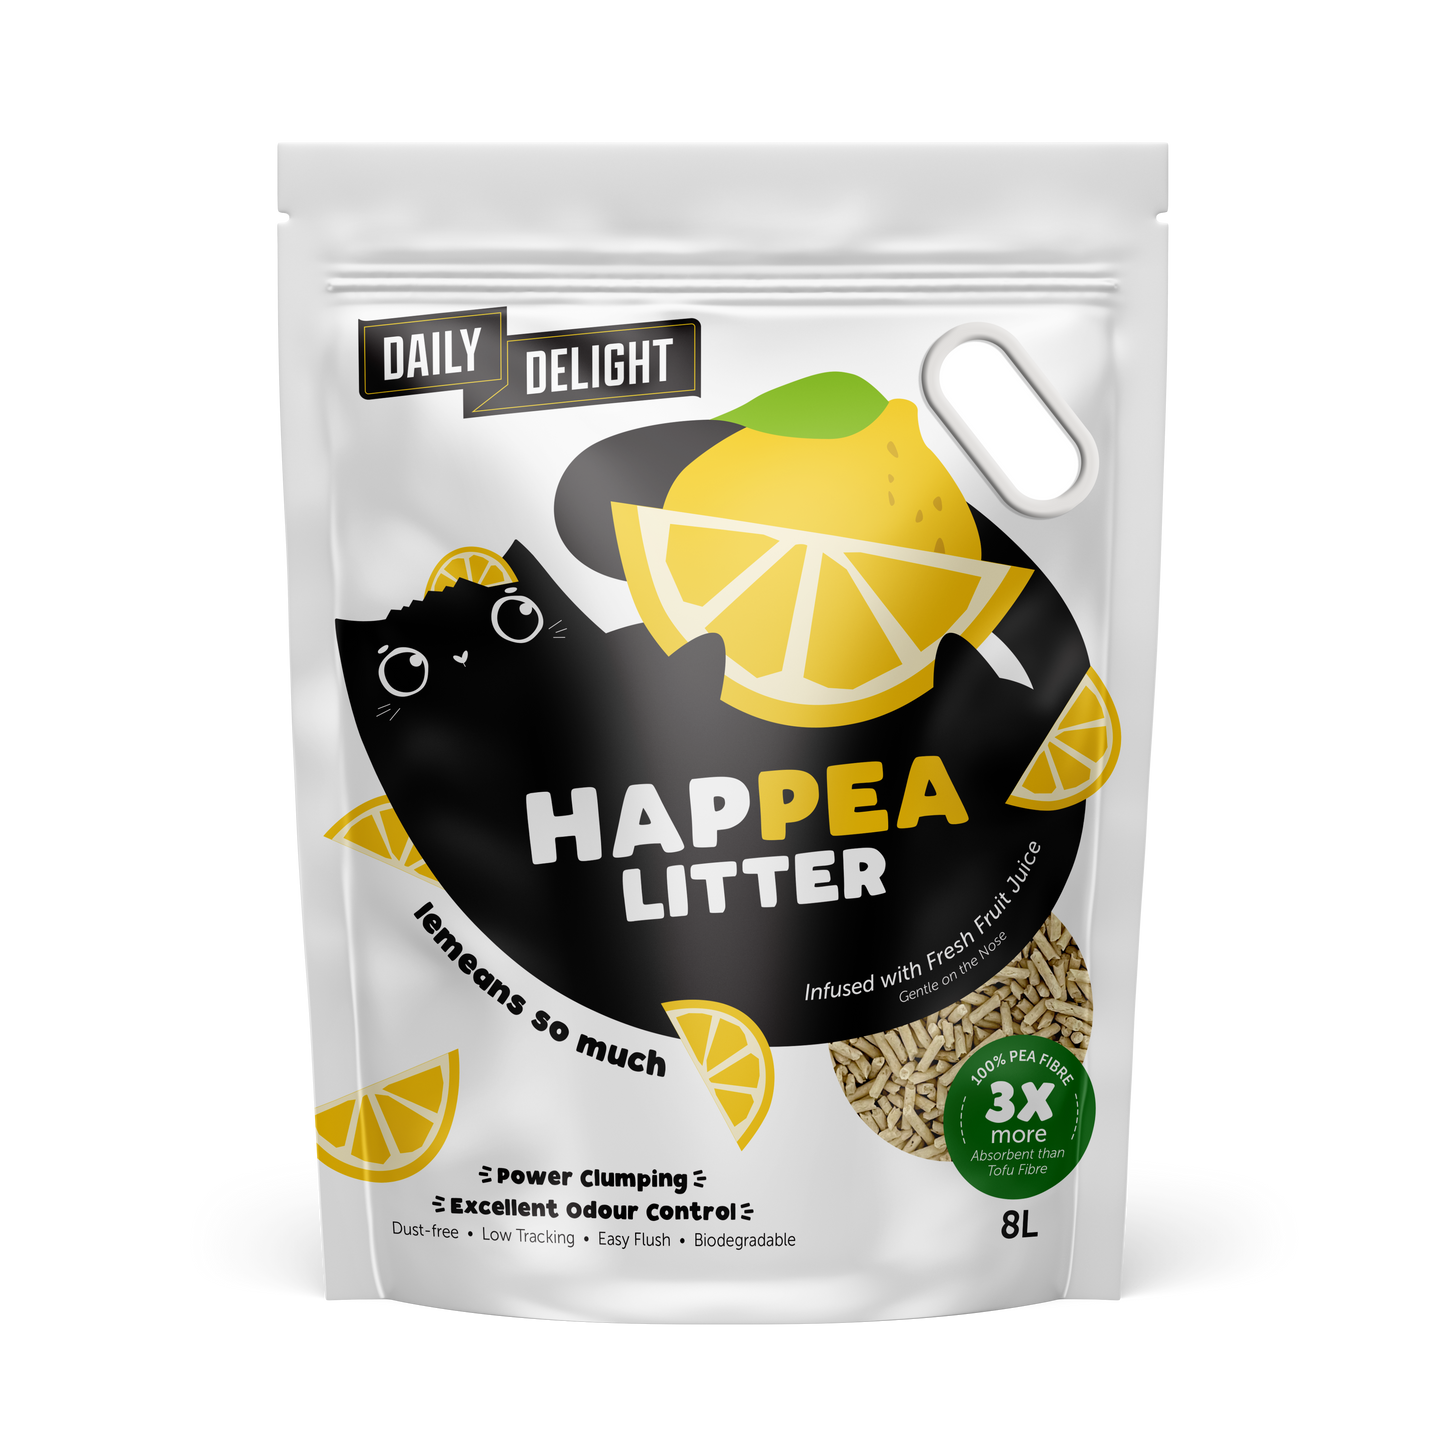 Daily Delight Happea Litter Lemeans So Much Lemon Scented Cat Litter 8L (Bundle of 6)